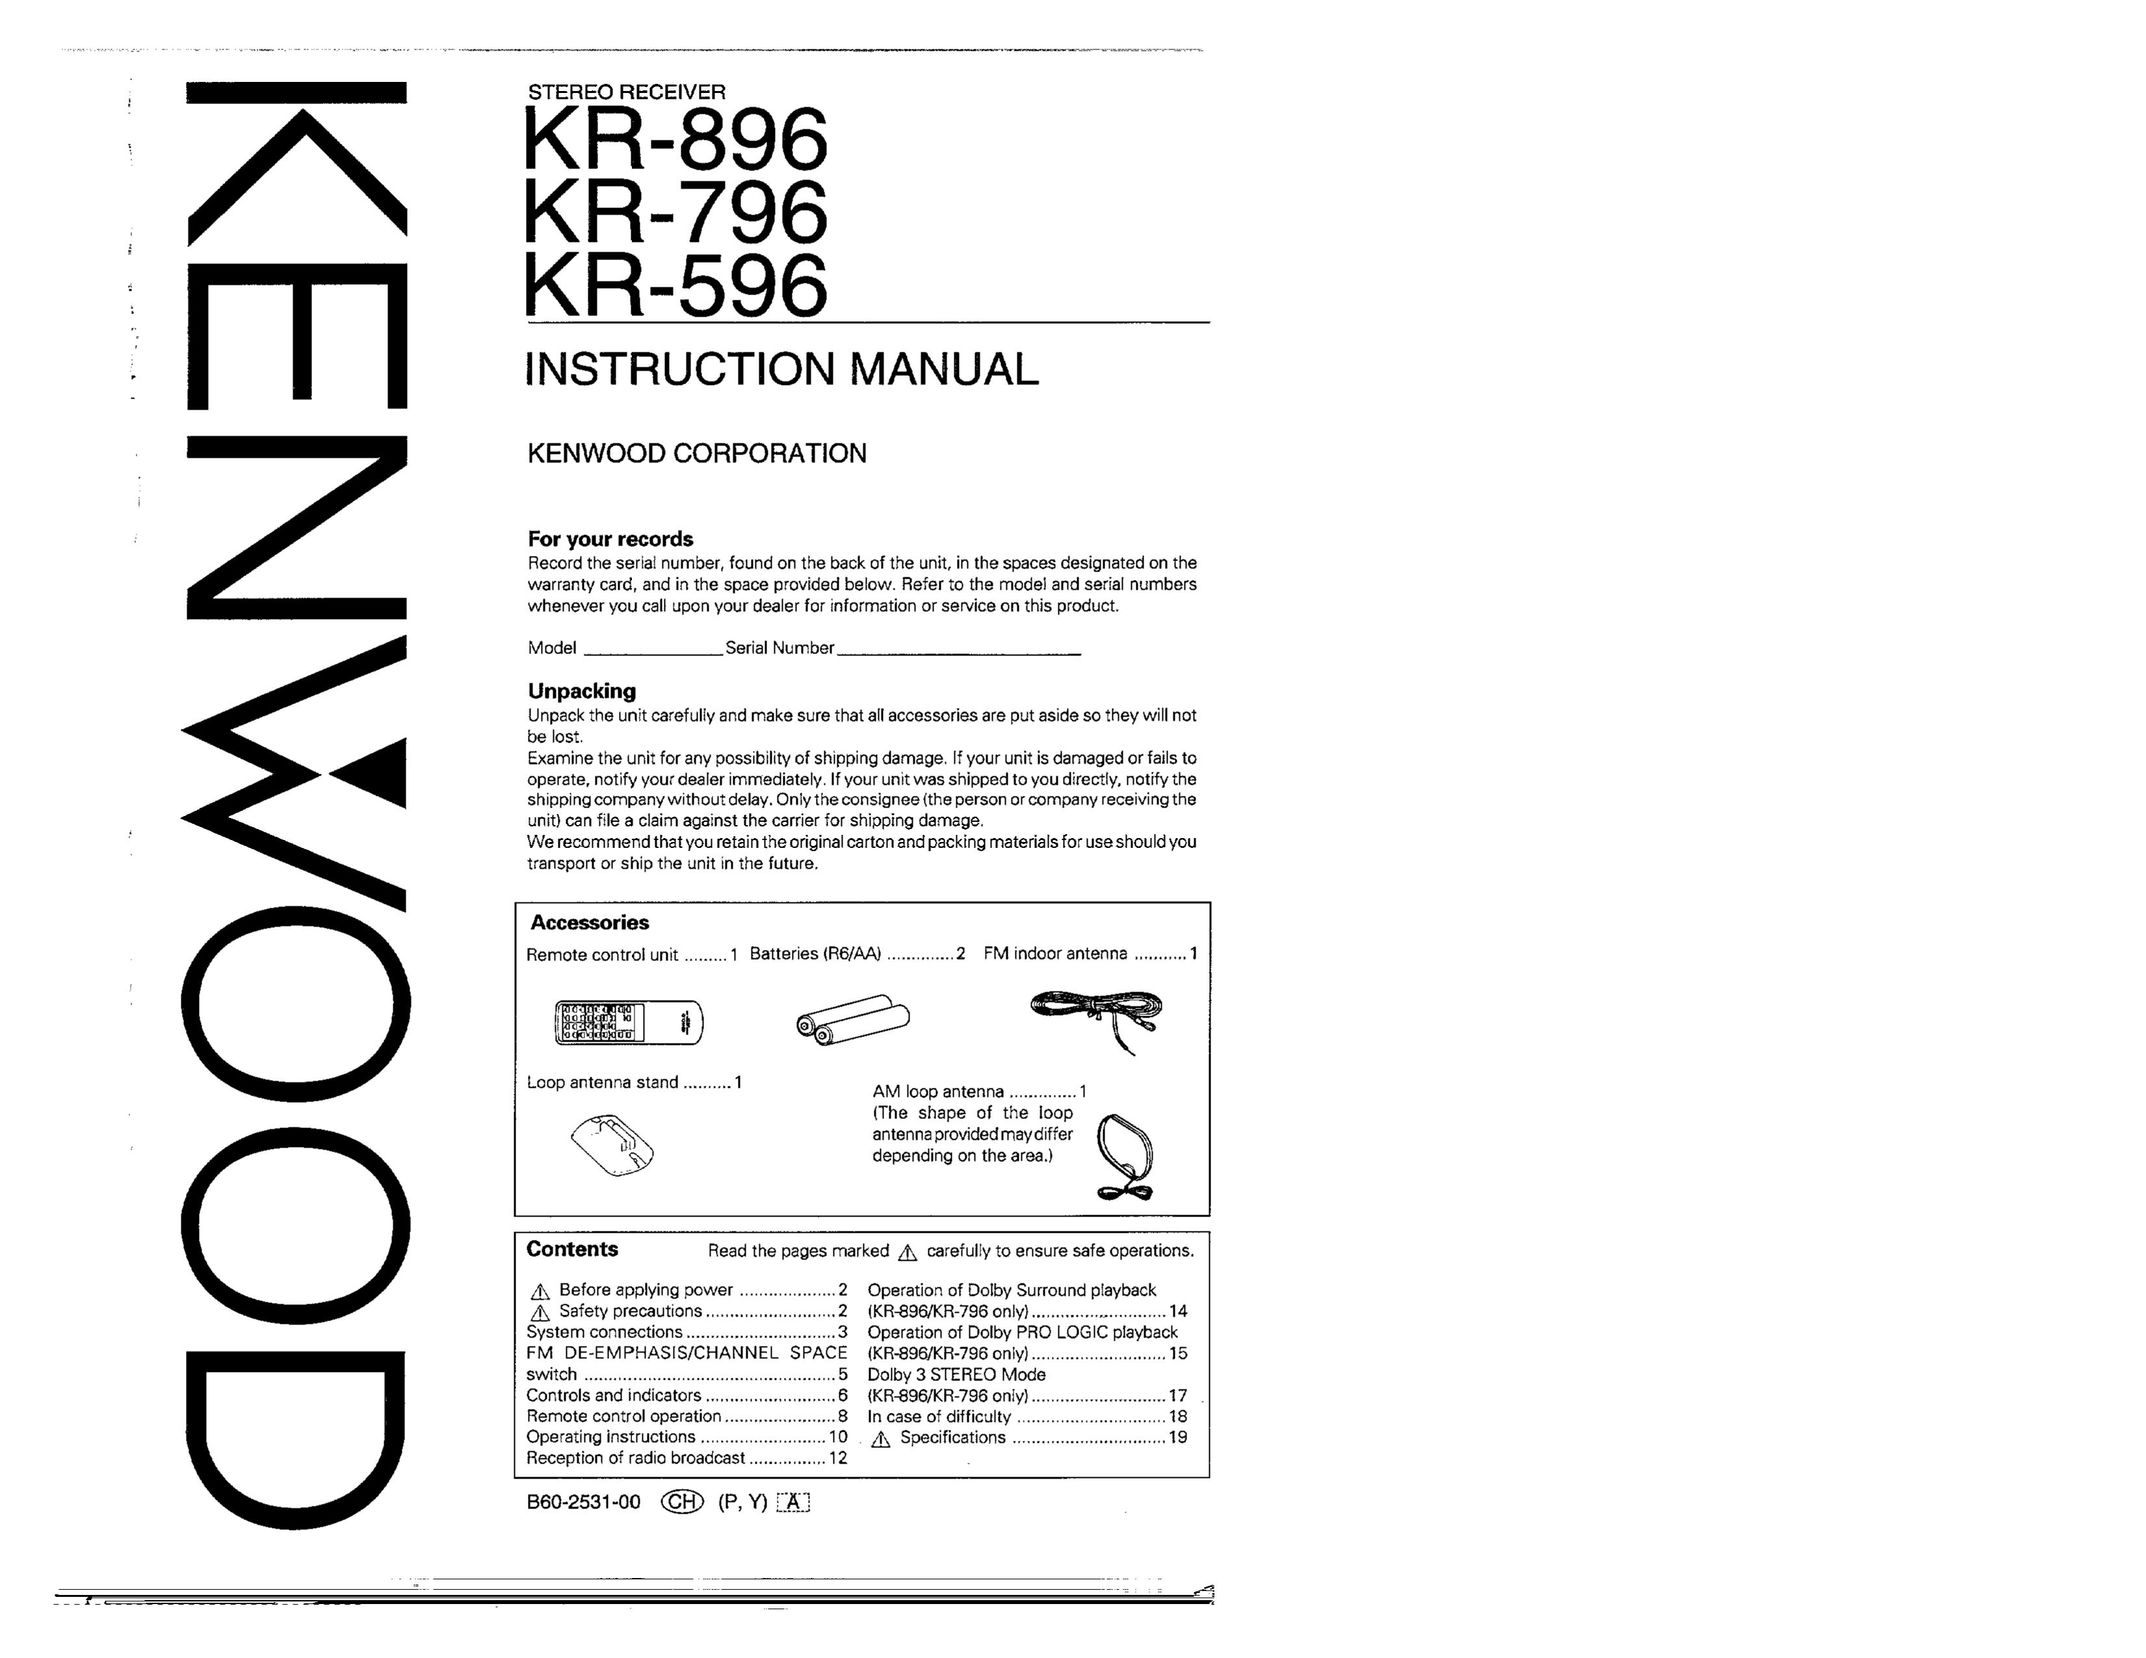 Kenwood KR-796 Stereo Receiver User Manual